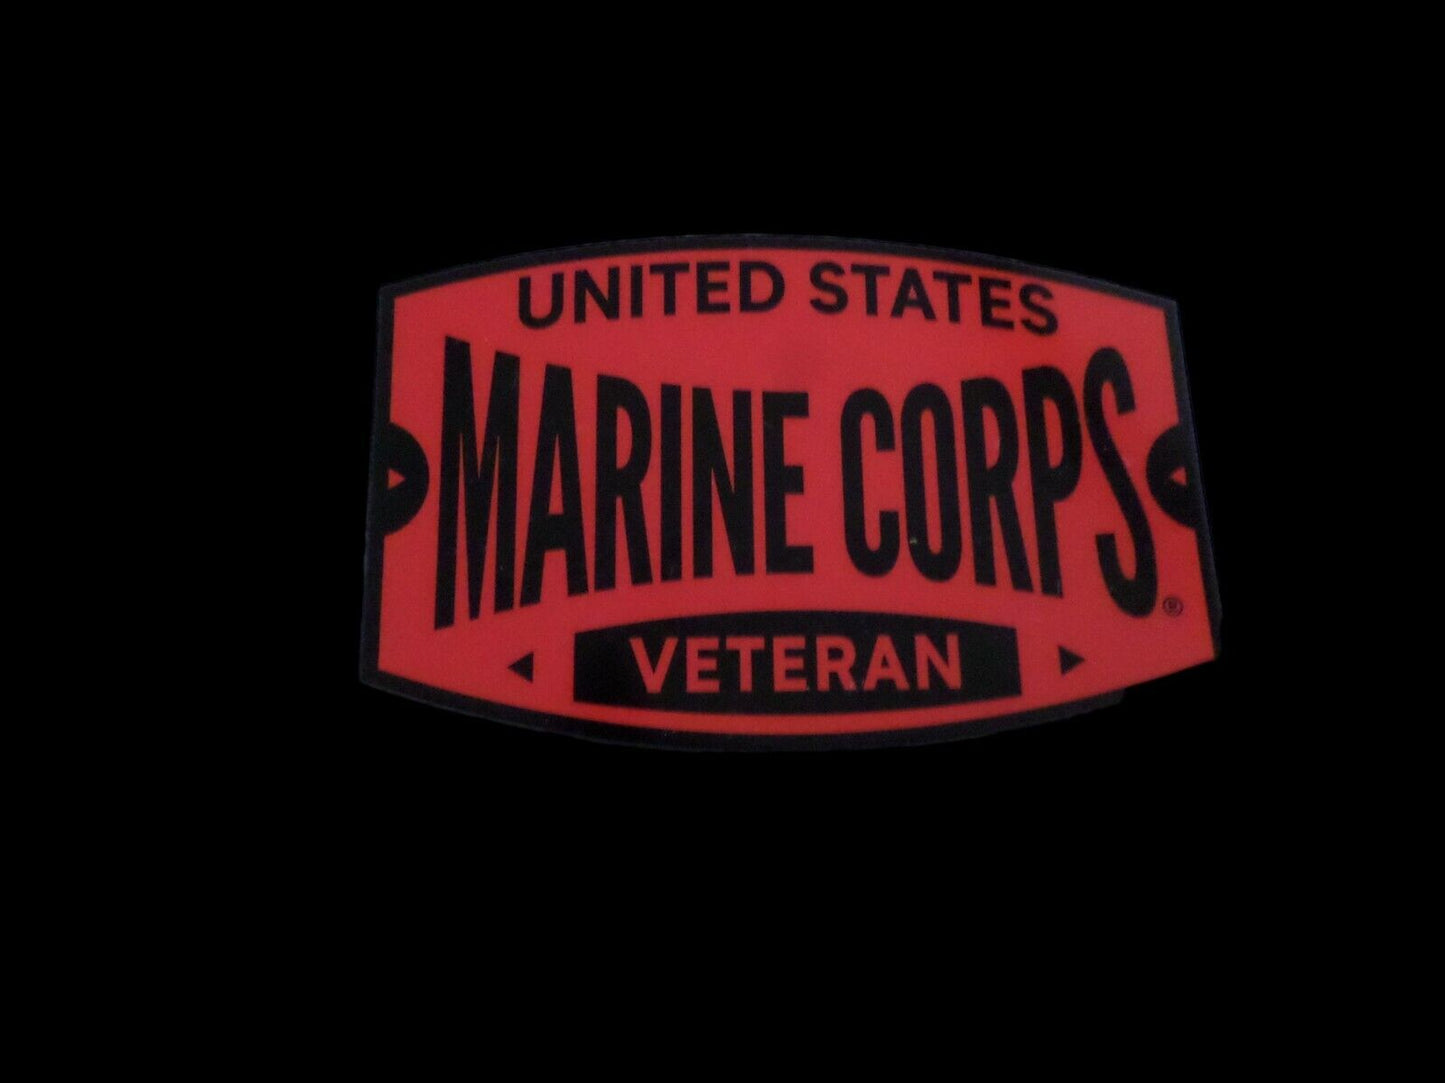 U.S MARINE CORPS VETERAN WINDOW DECAL USMC